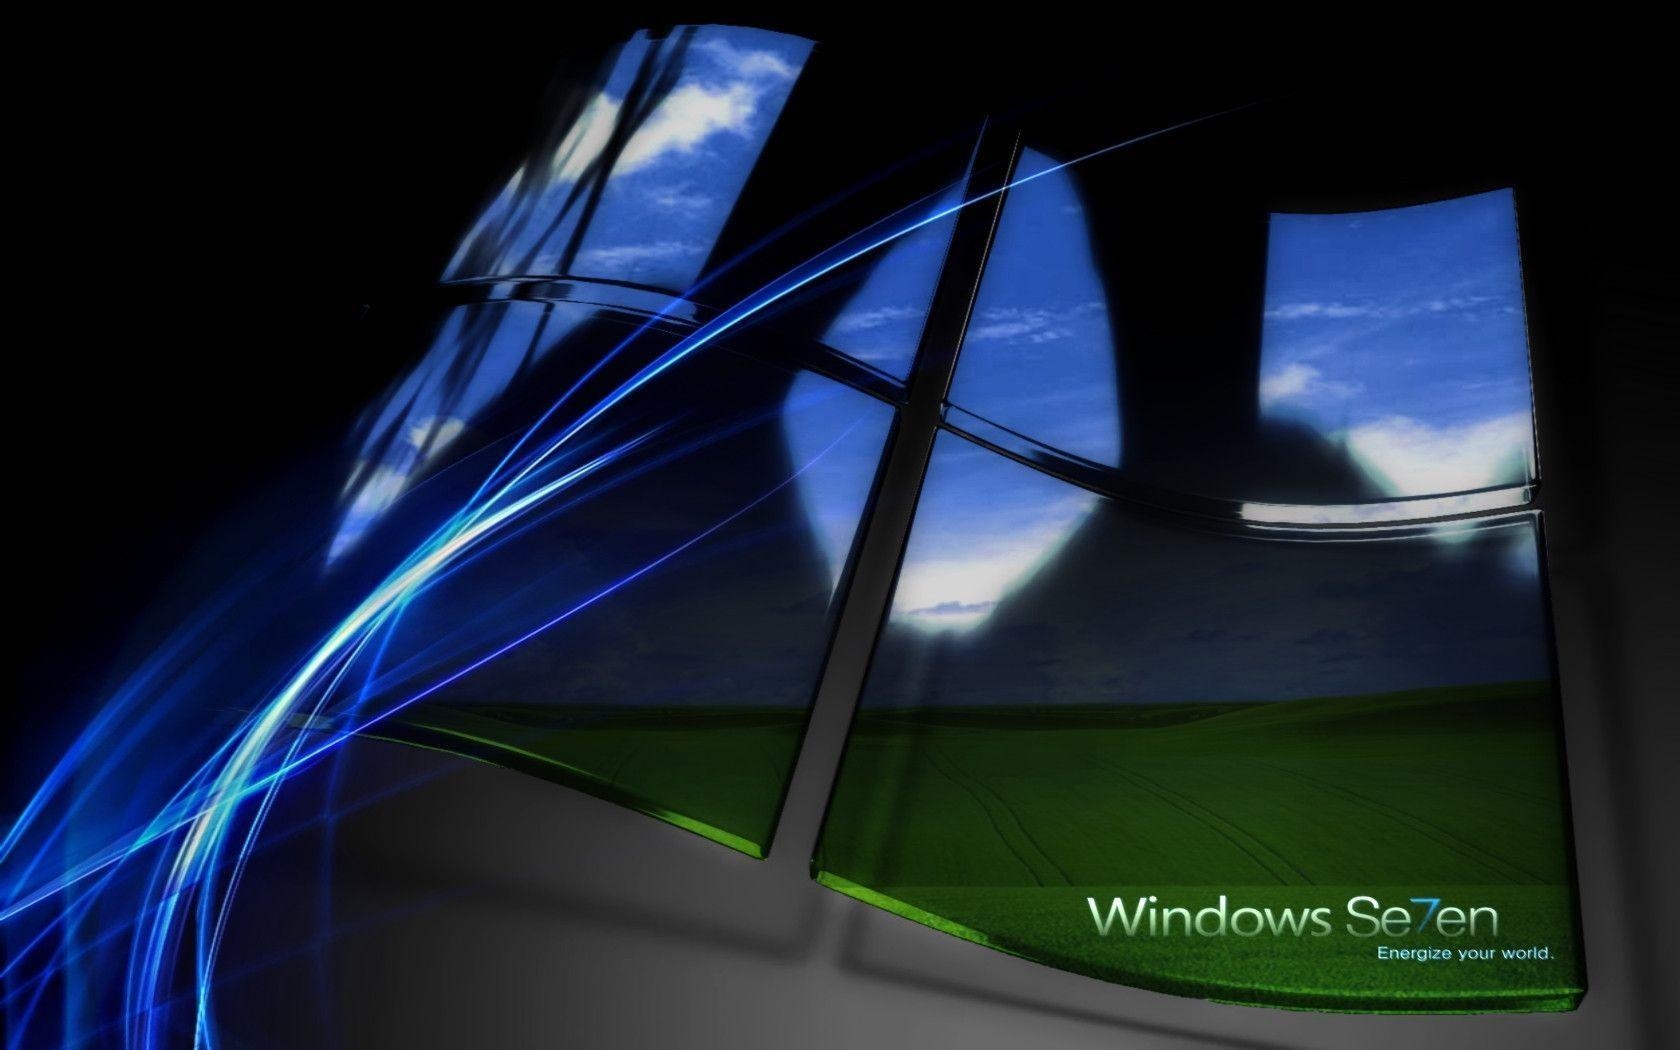 Interactive Wallpaper Windows 10 - Hd Wallpapers Windows 7 Professional -  1680x1050 Wallpaper 